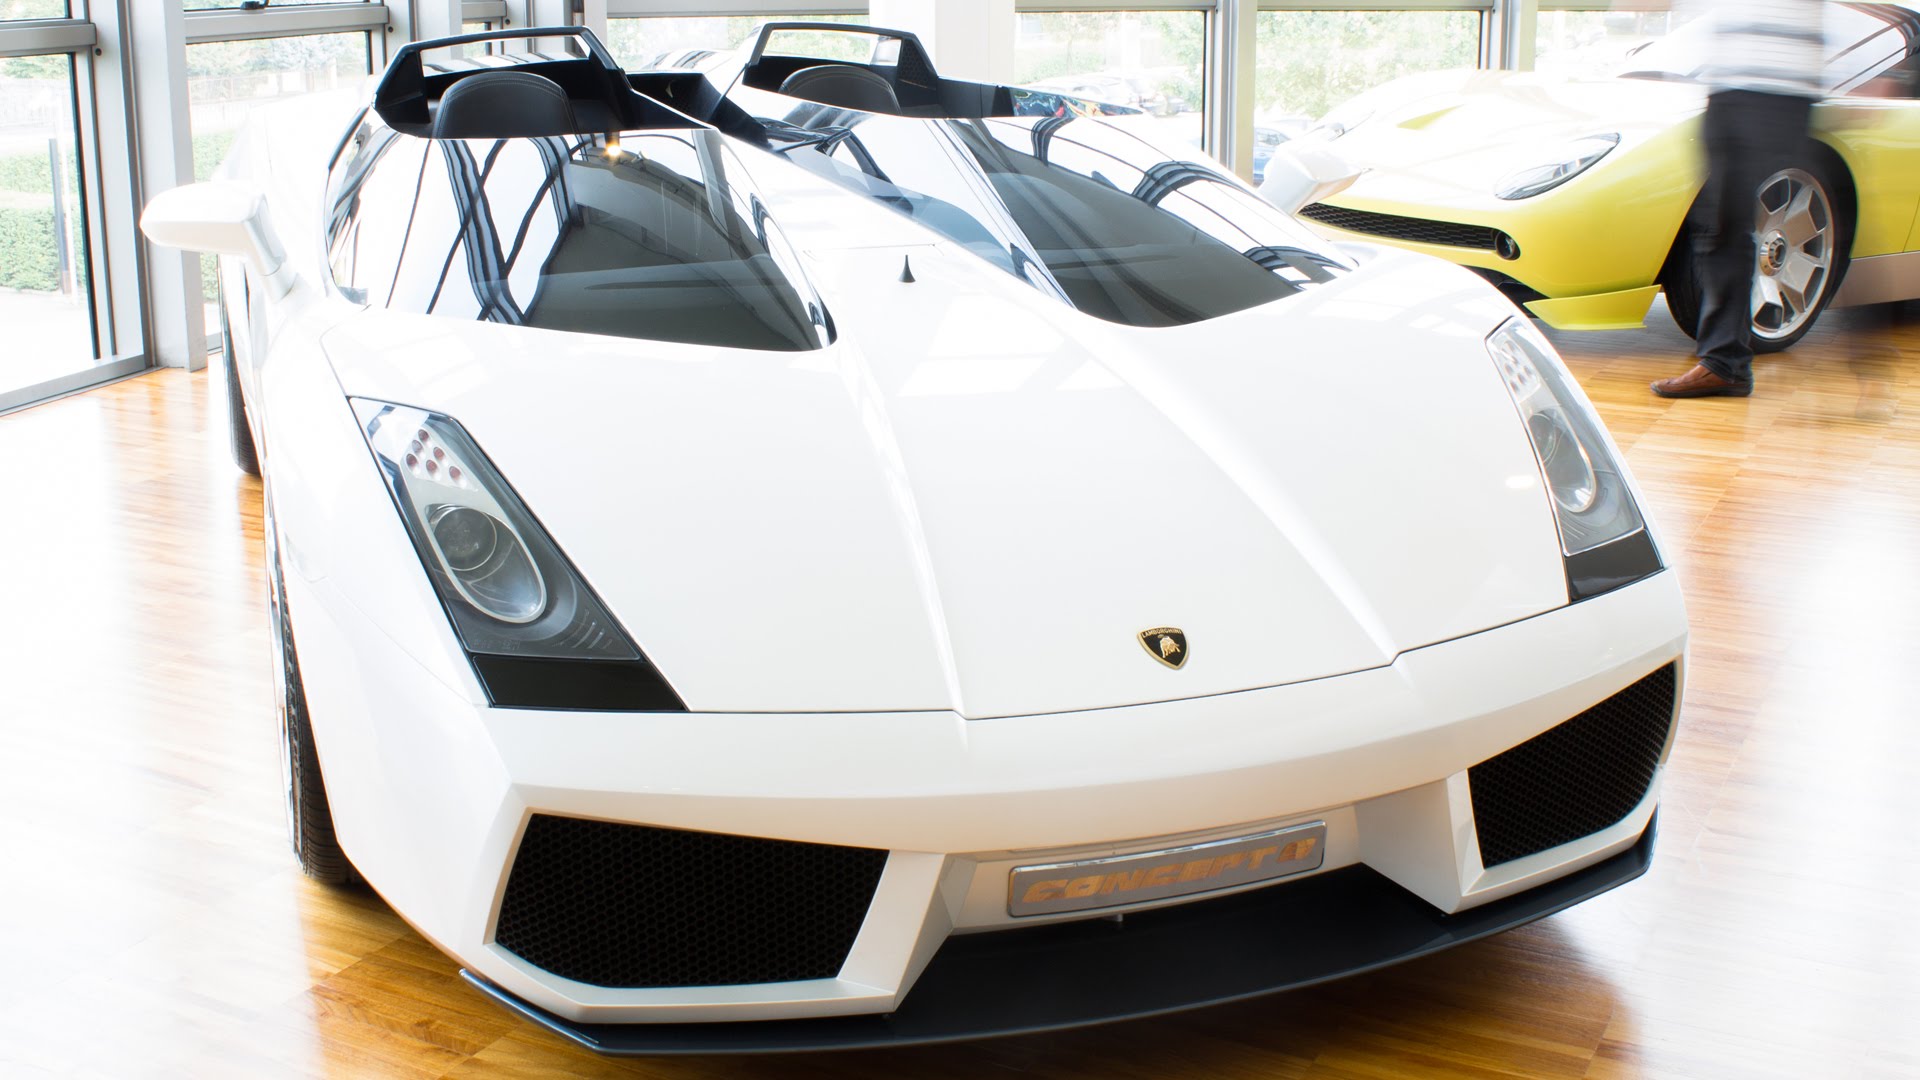 Amazing Lamborghini Concept S Pictures & Backgrounds